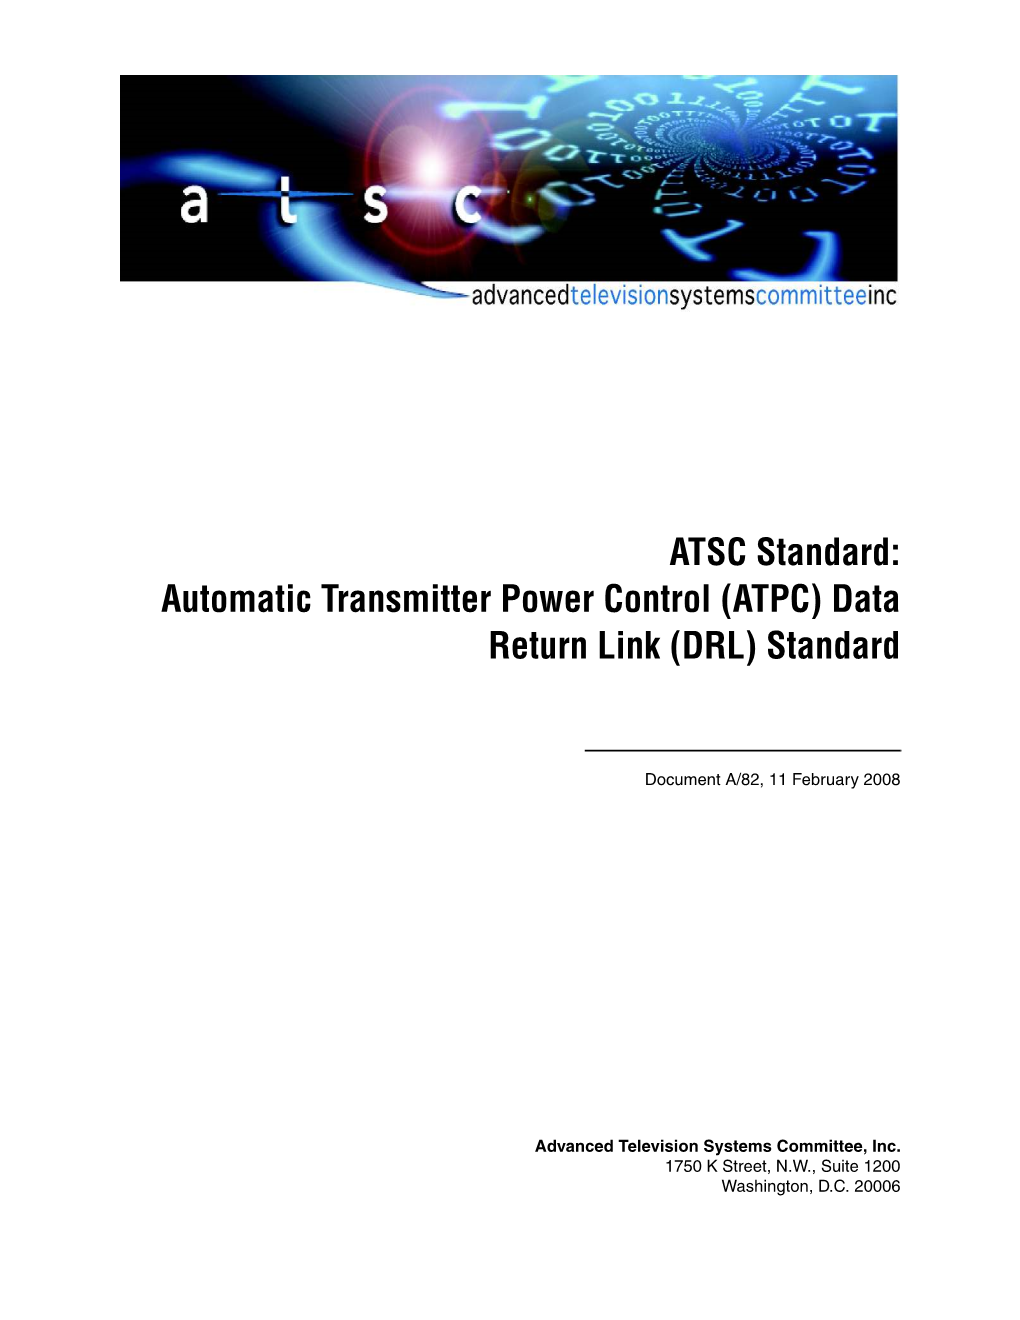 ATPC) Data Return Link (DRL) Standard